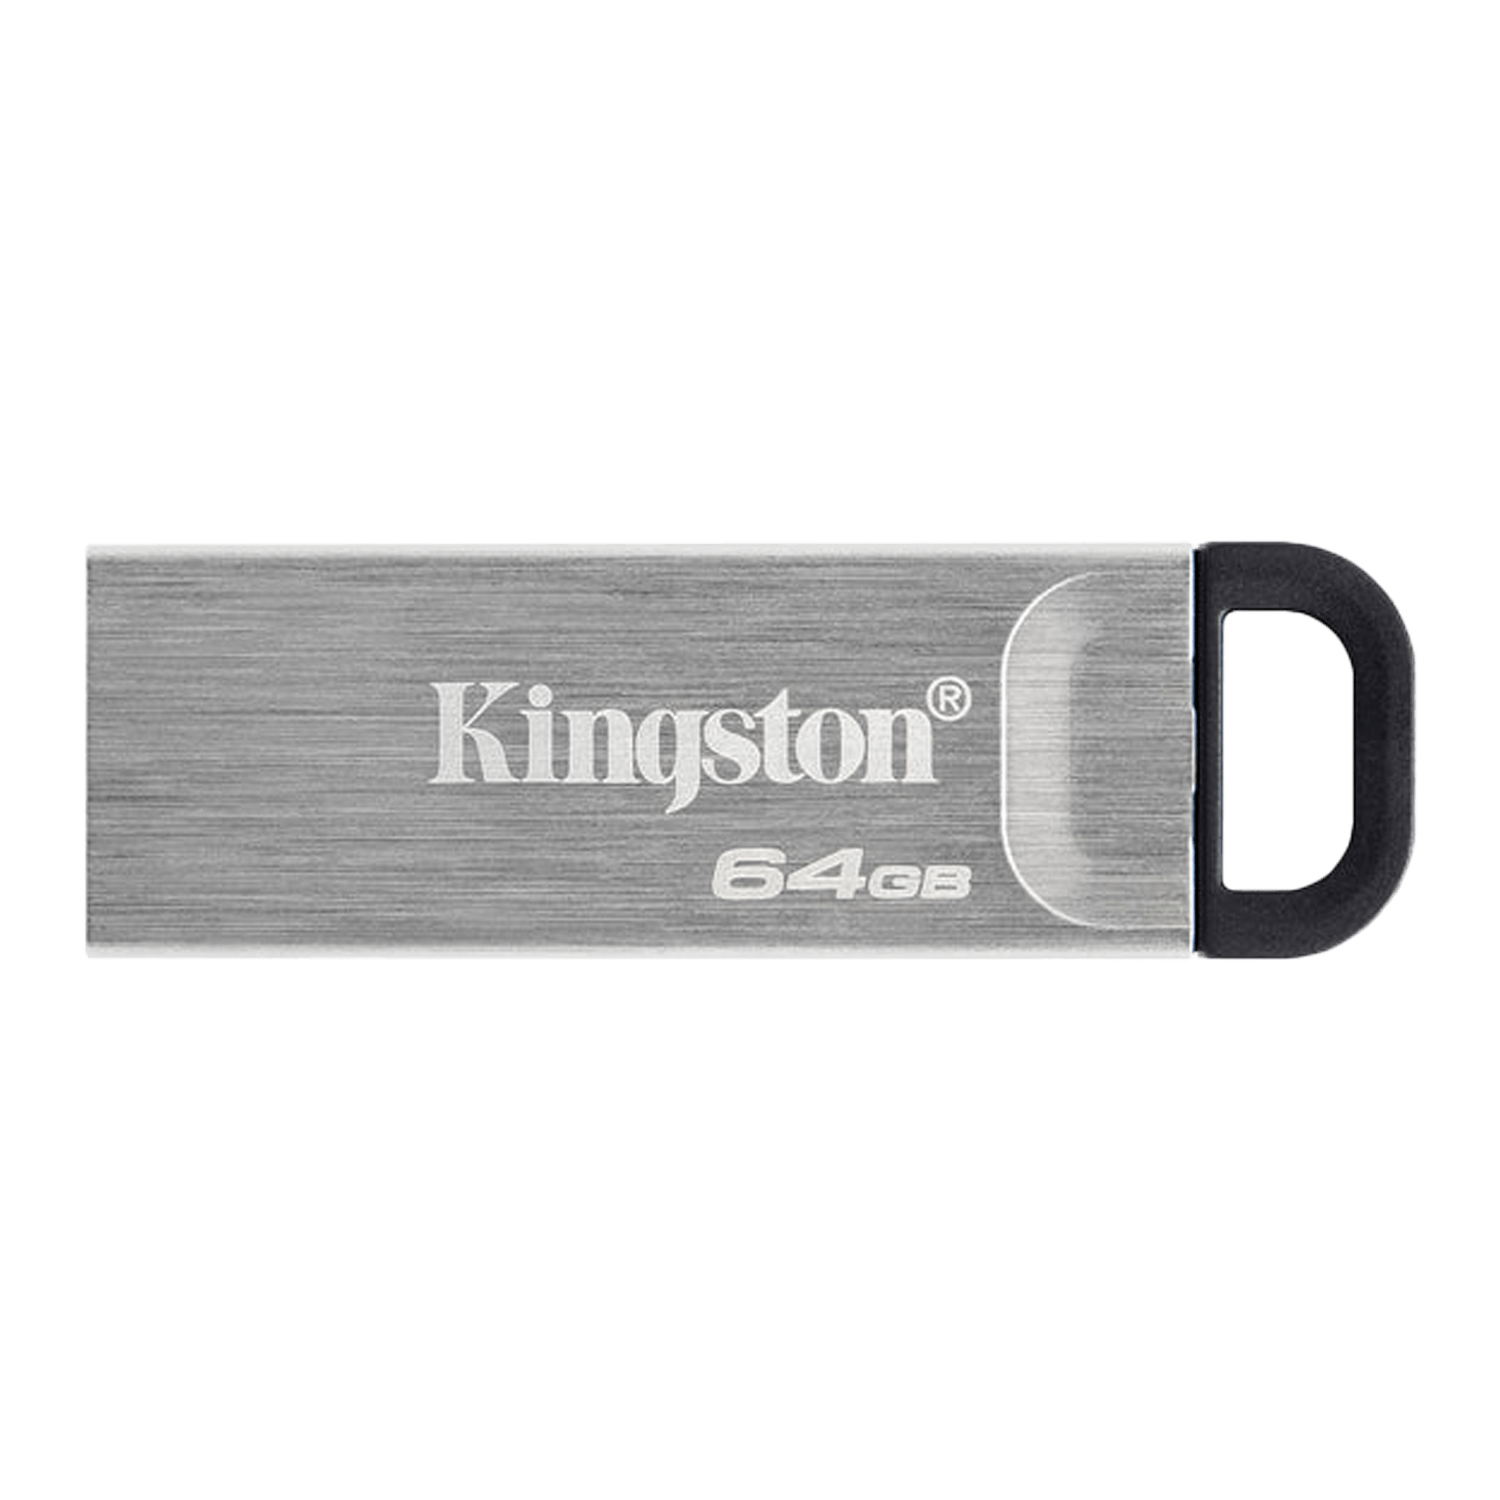 Pendrive Kingston DataTraveler Kyson 64GB USB 3.2 - Prata DTKN/64GB